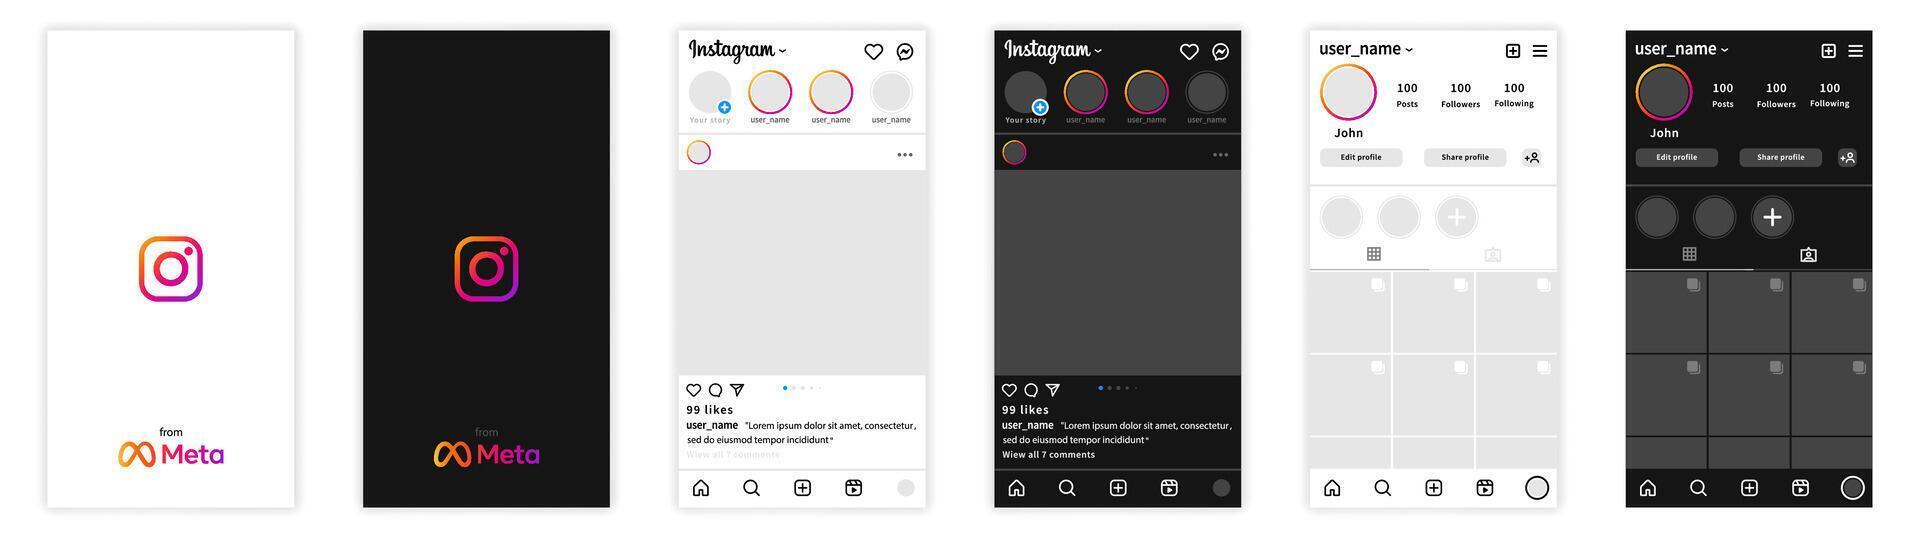 Instagram interface modelos. Instagram maquetes. social rede interface. Instagram conceito vetor